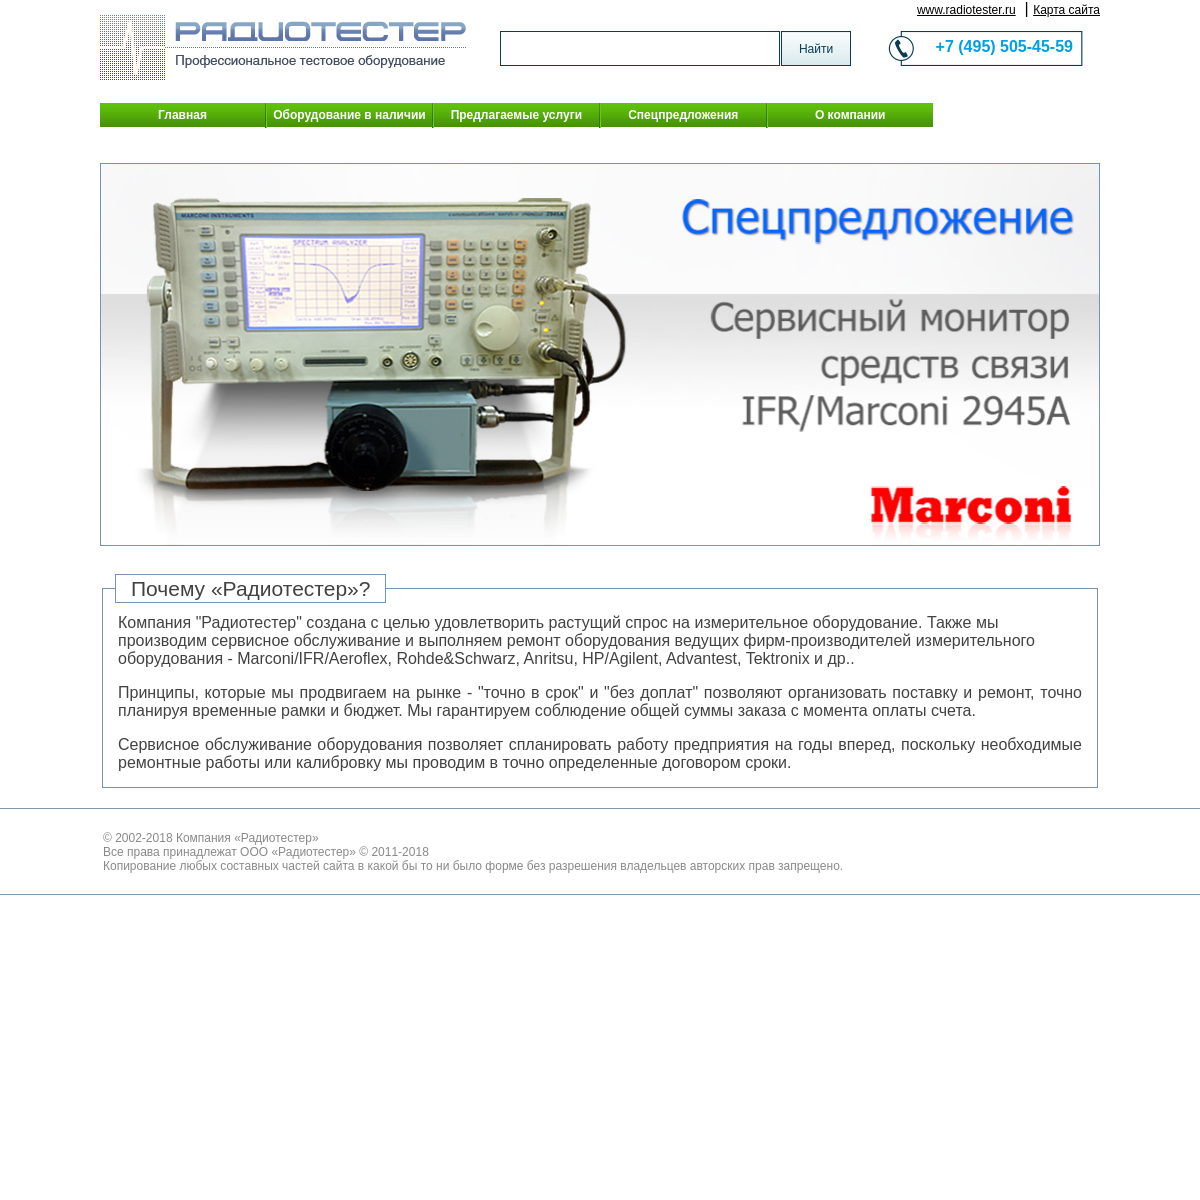 A complete backup of radiotester.ru